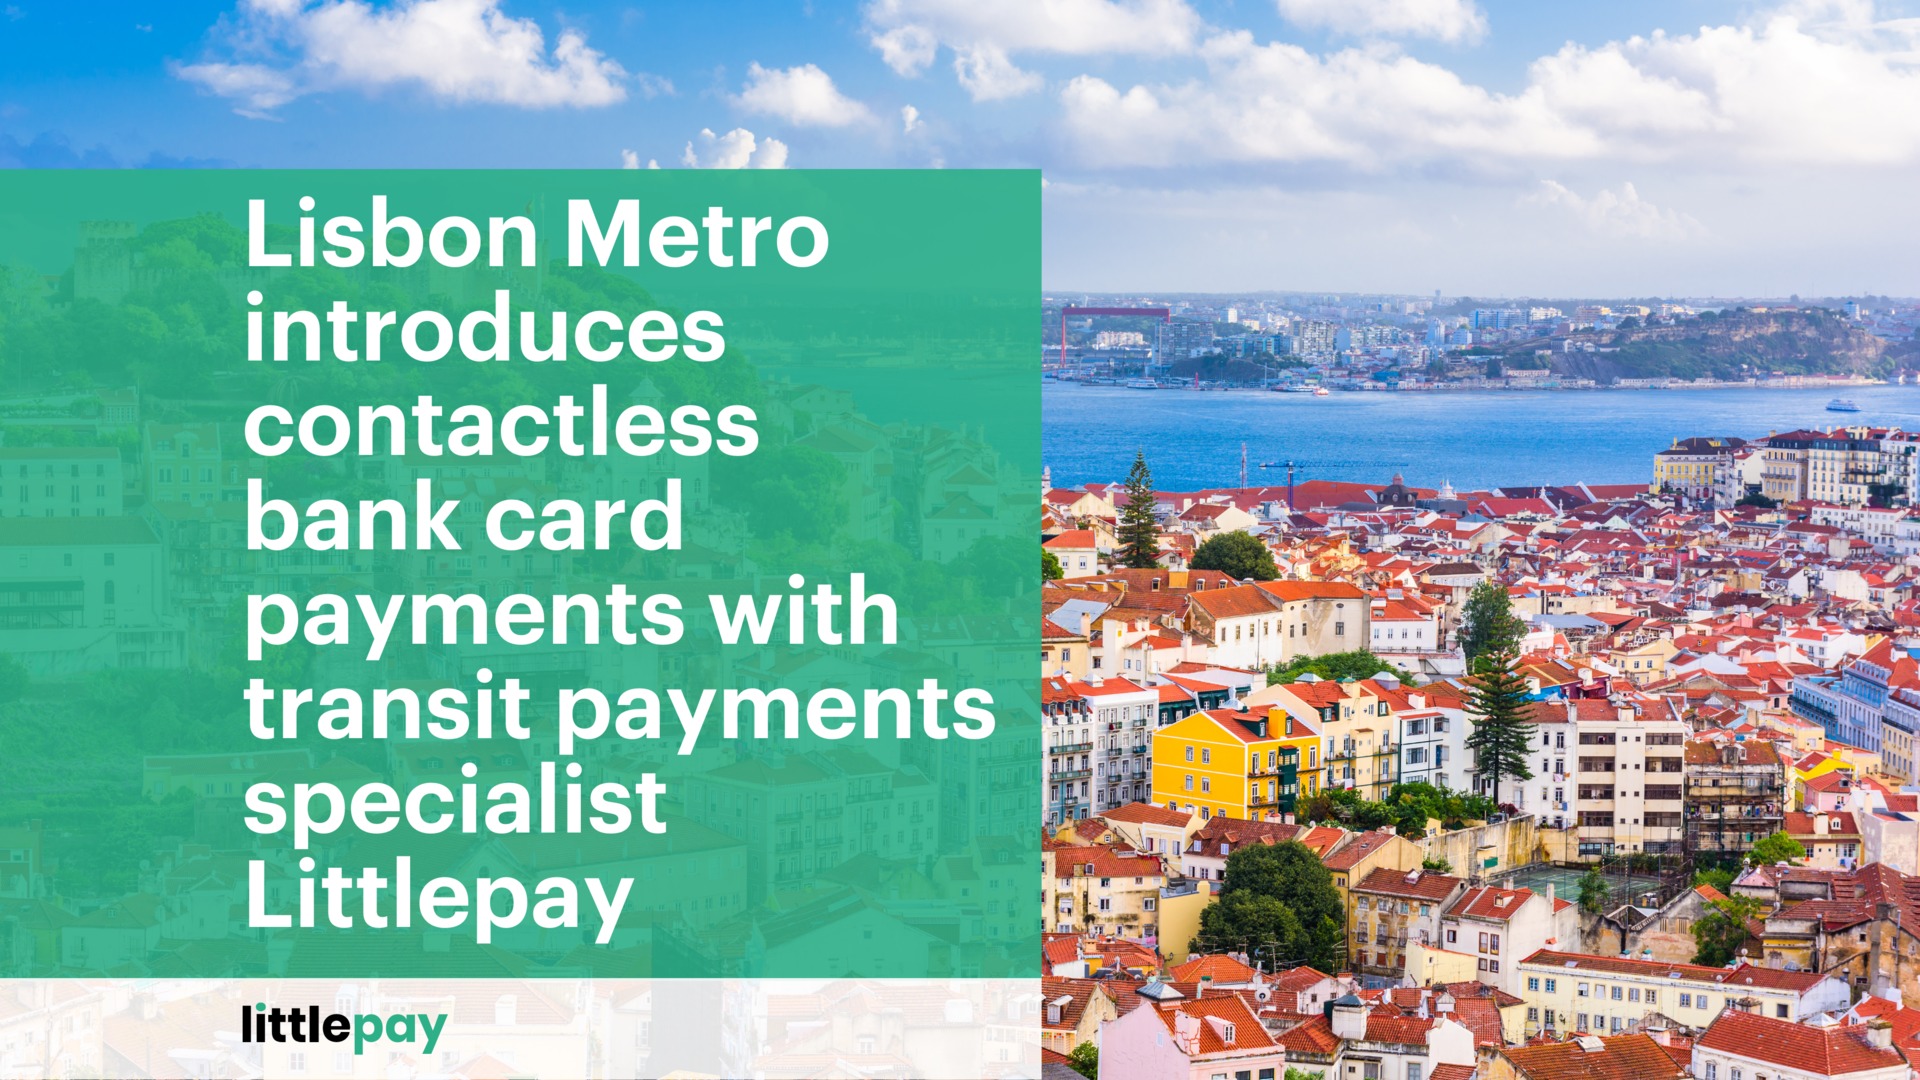 Lisbon Metro introduces contactless bank card payments